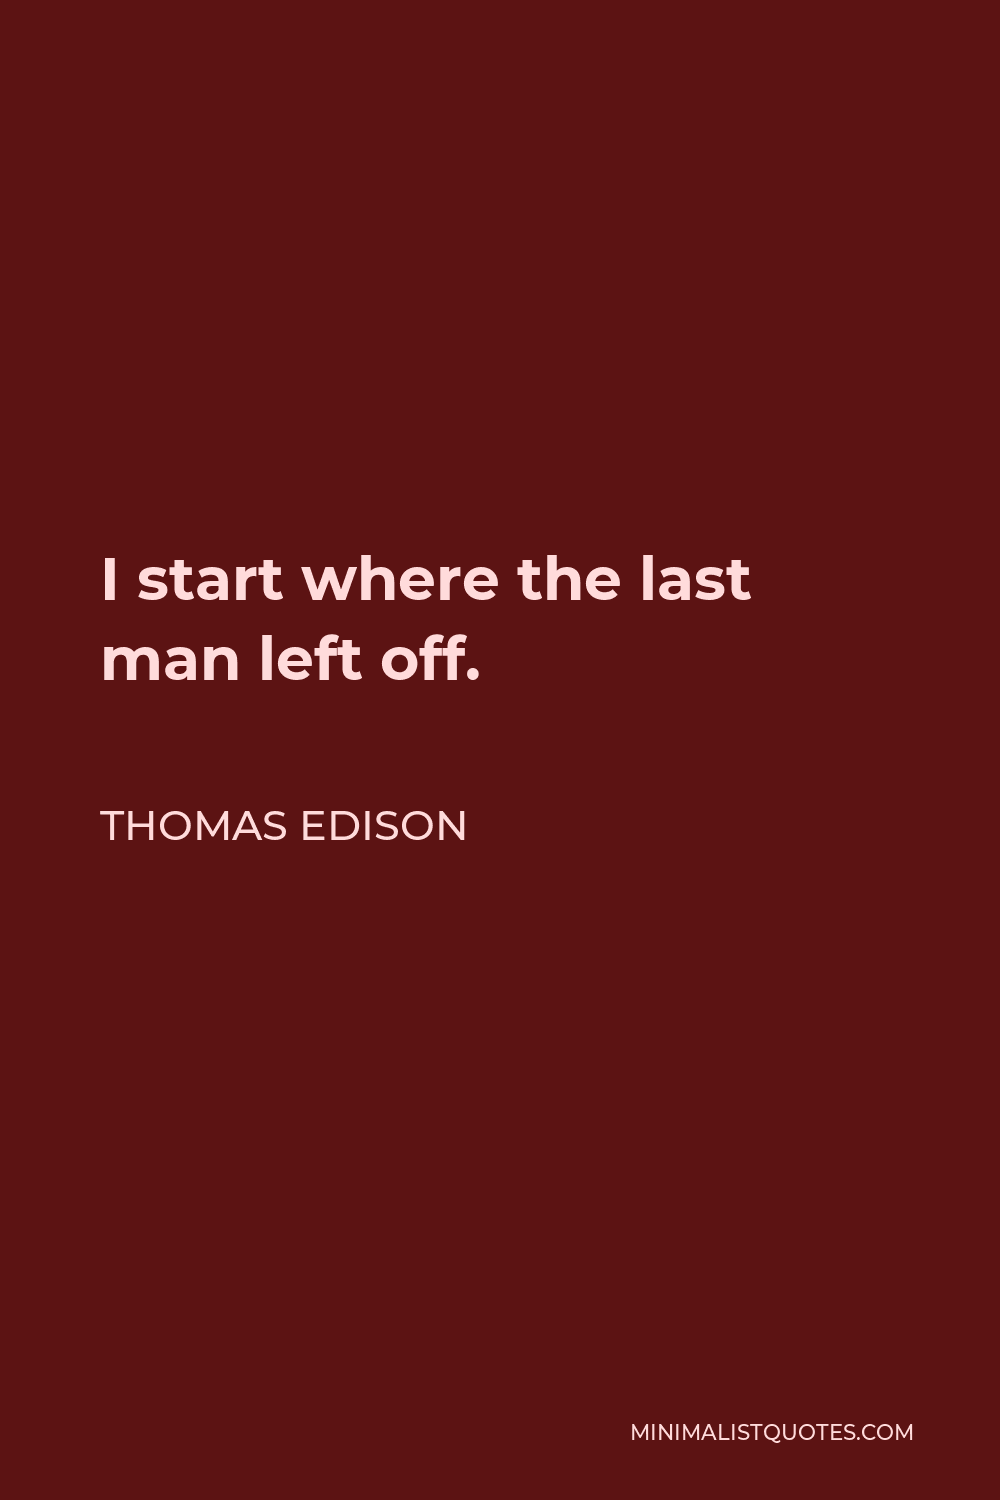 Thomas Edison Quote - I start where the last man left off.